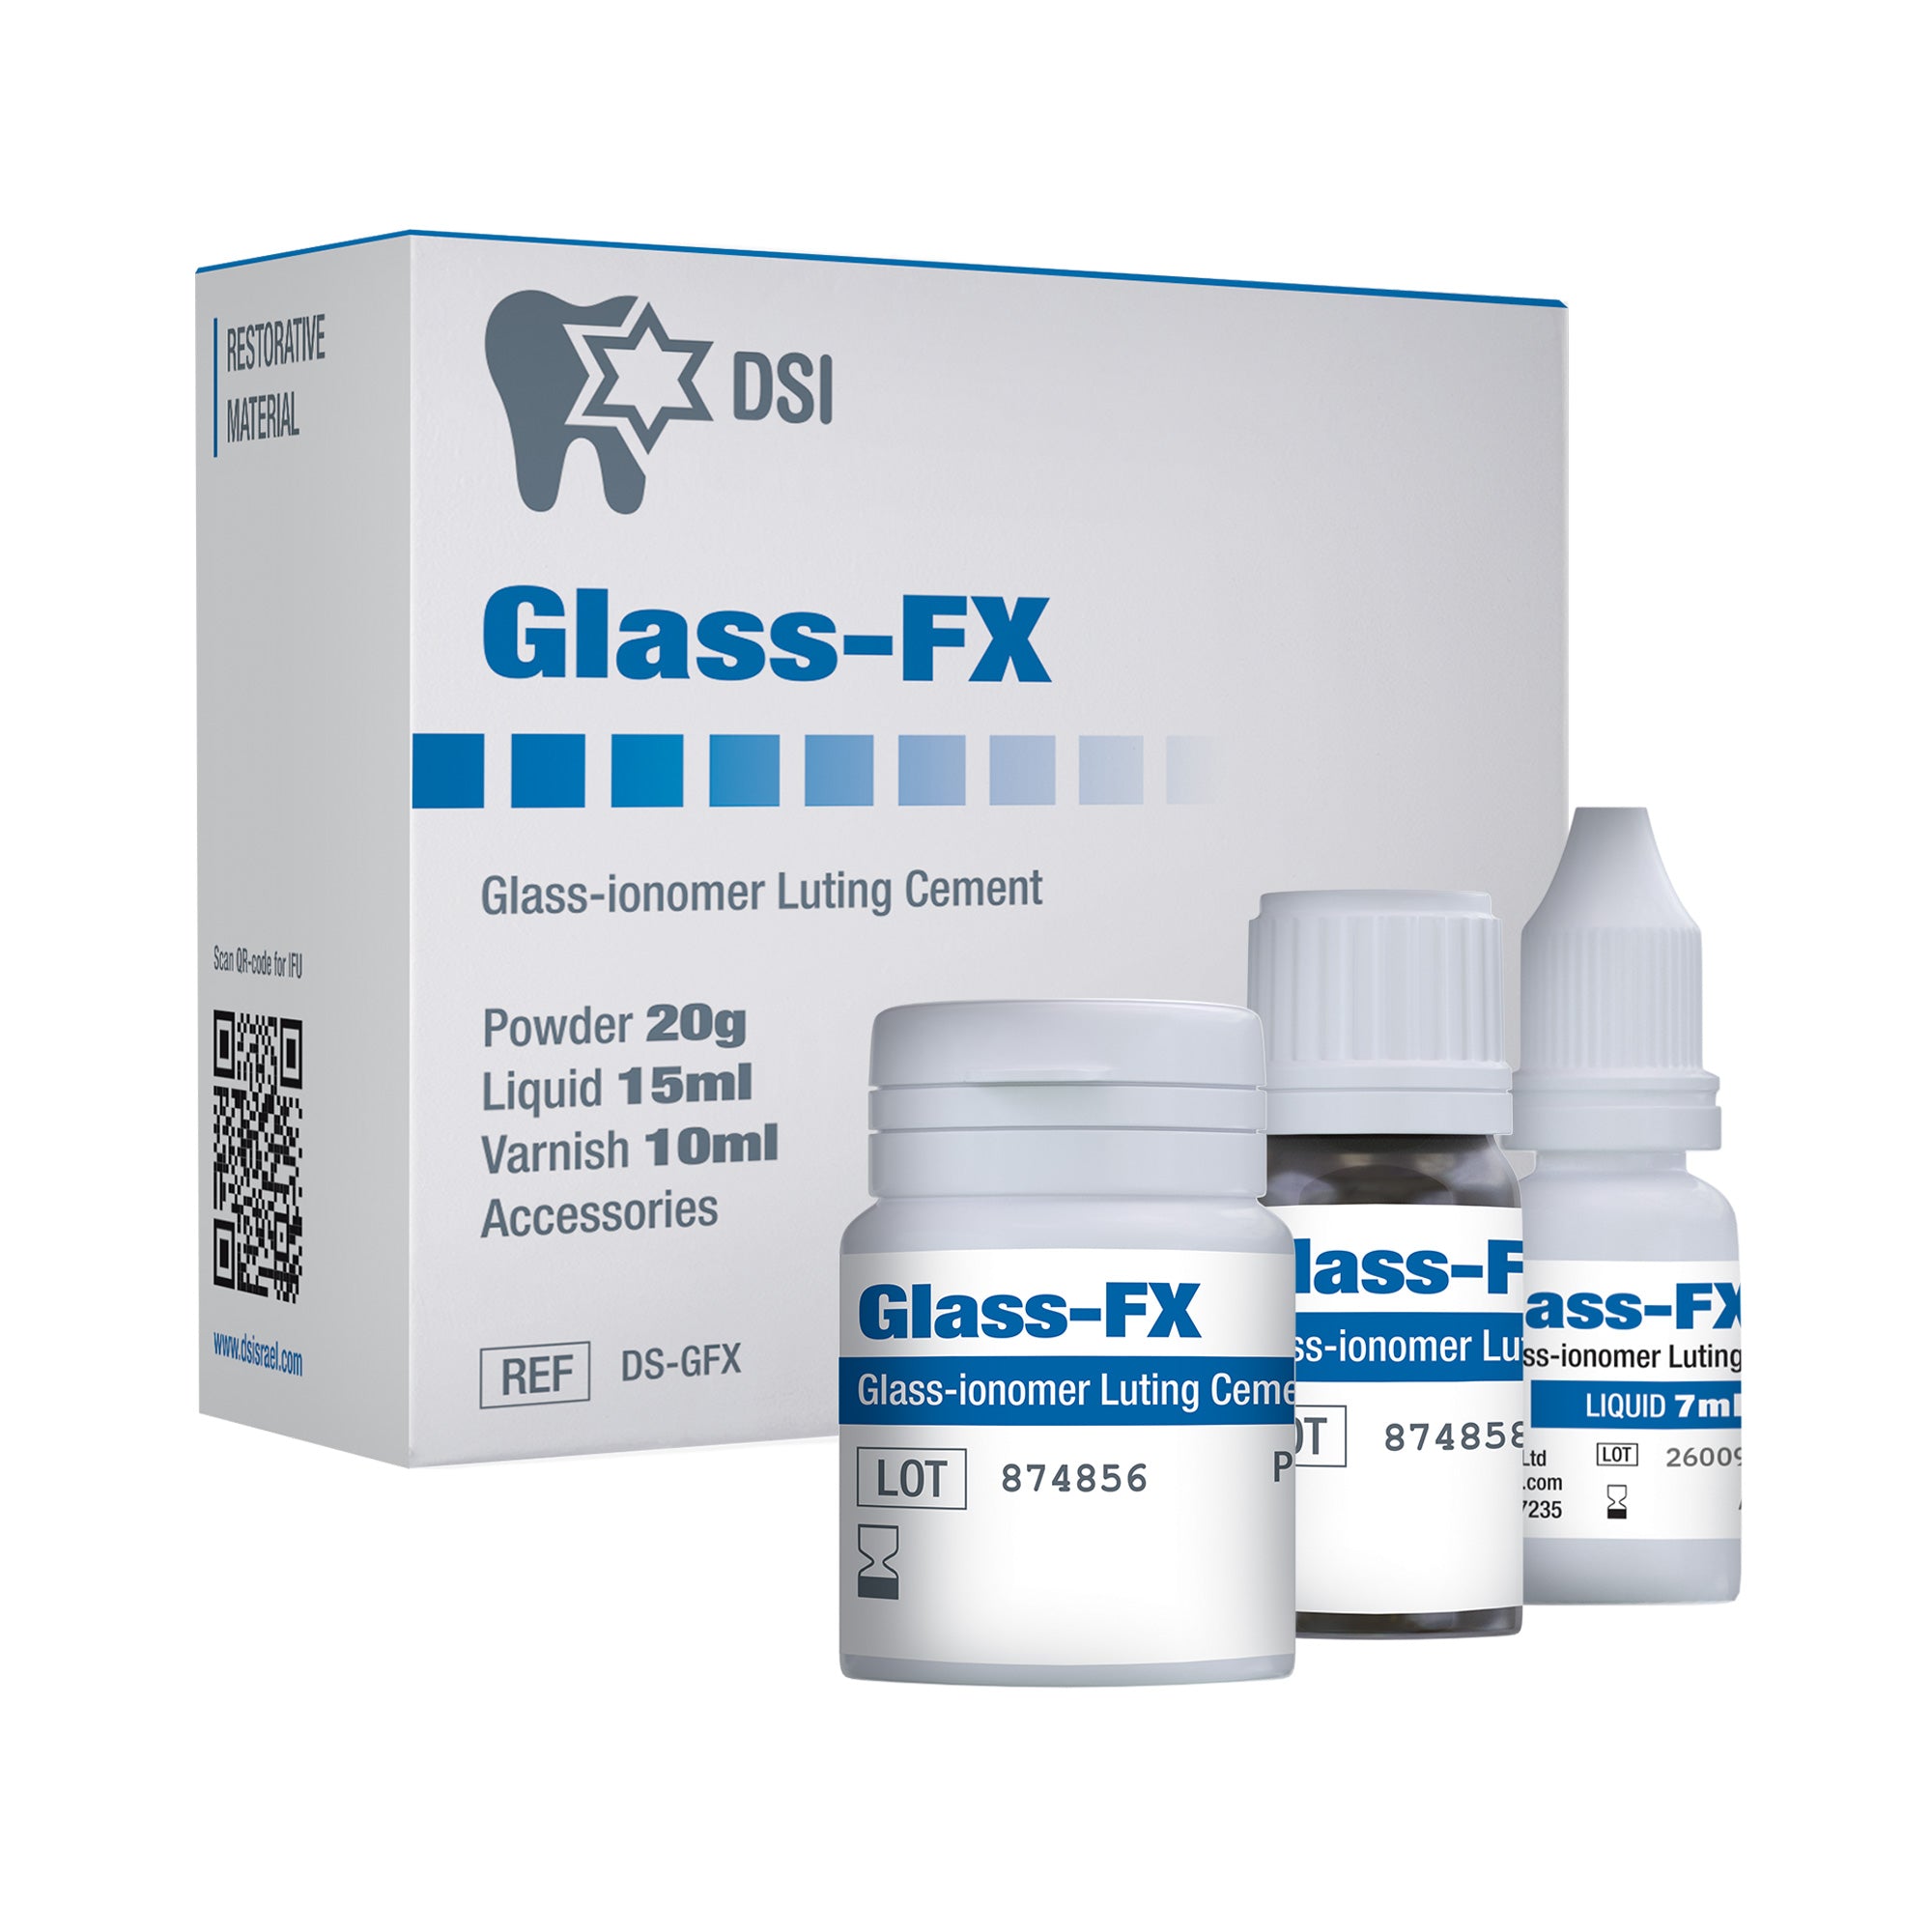 DSI Glass FX Glass-Ionomer Luting Cement 20g + 15ml + 10ml